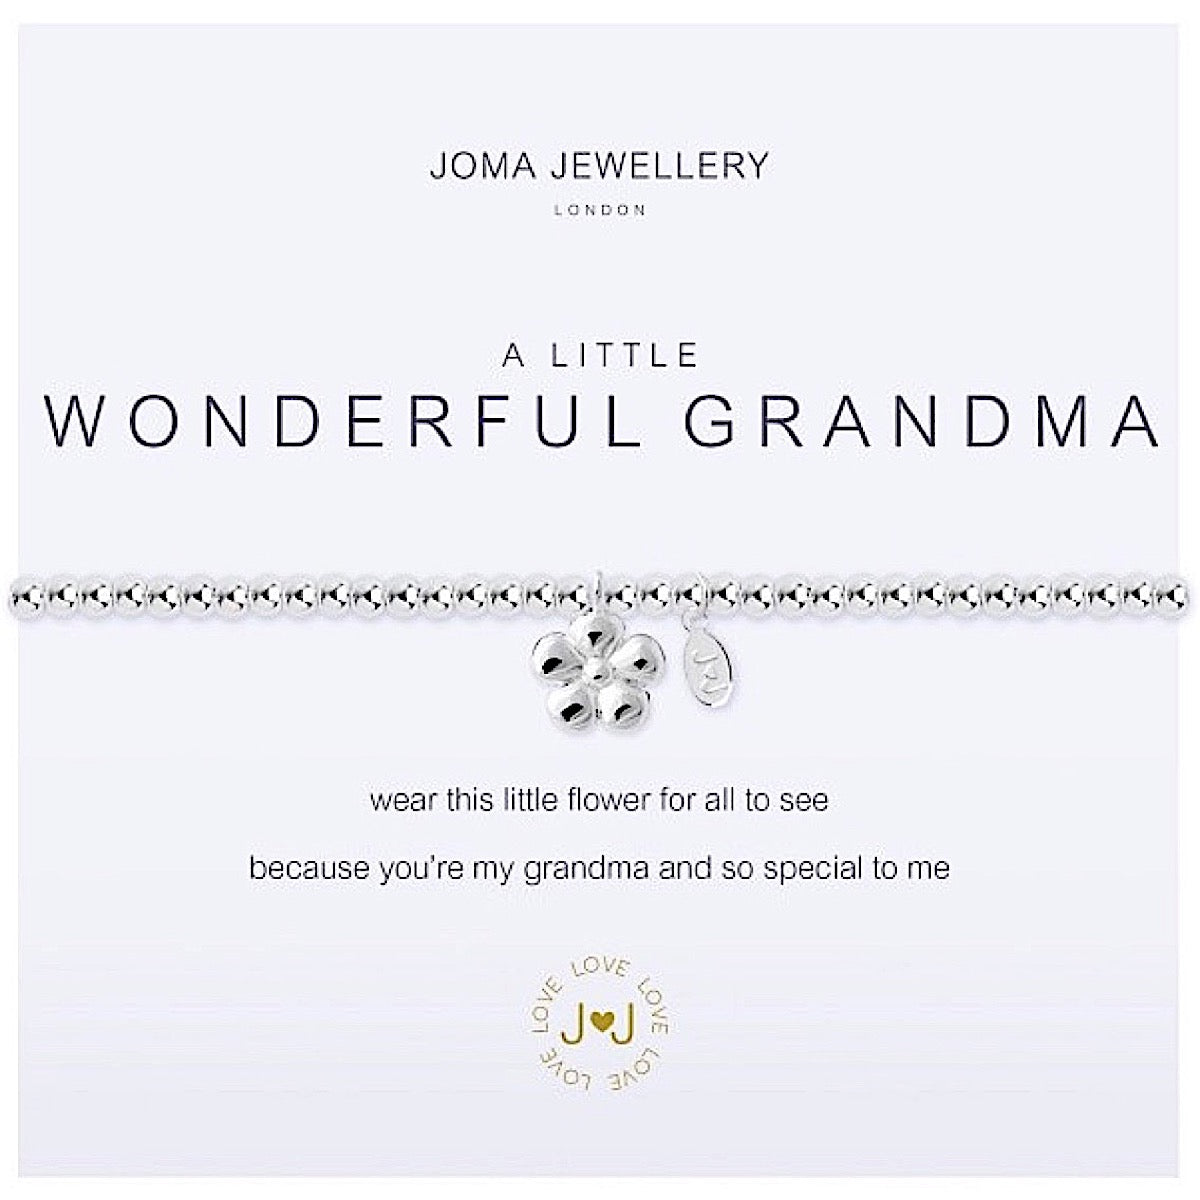 Joma Jewellery a little Wonderful Grandma Bracelet - flower